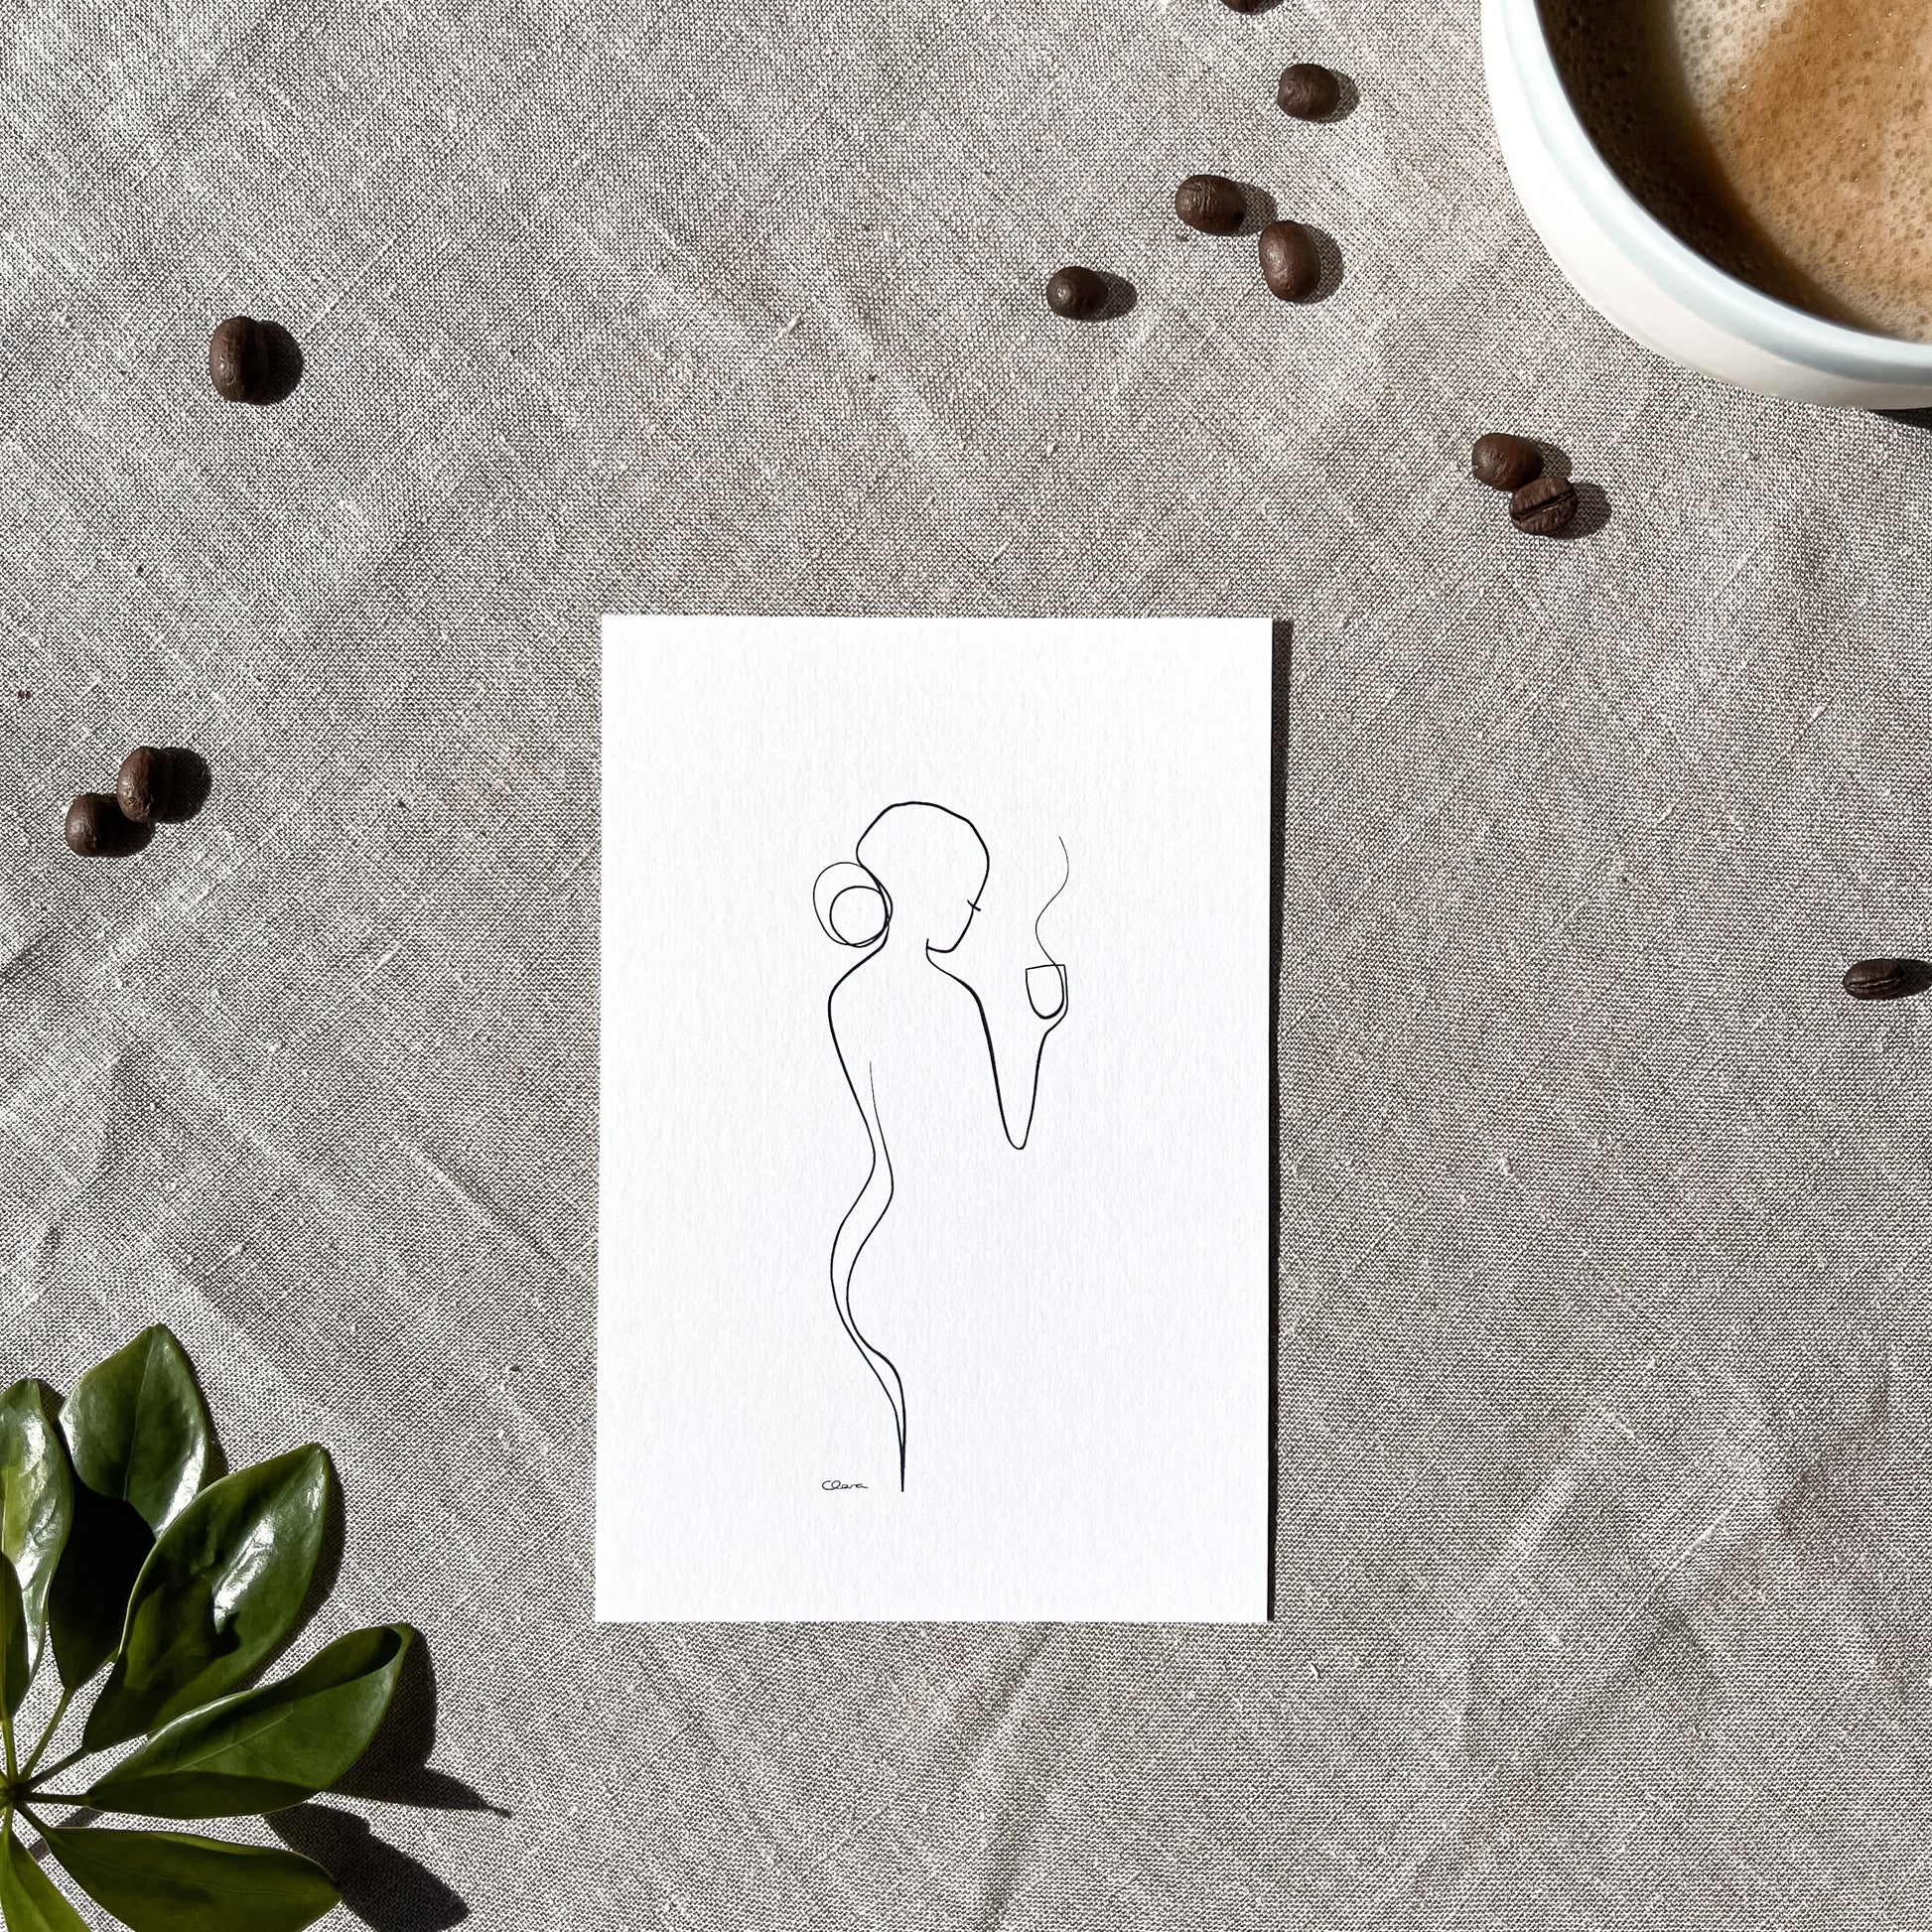 Kaffee oder Tee? Nr. 2-JUDITH CLARA-10x15 cm (zartweiß) Papier 300g-one-line-art